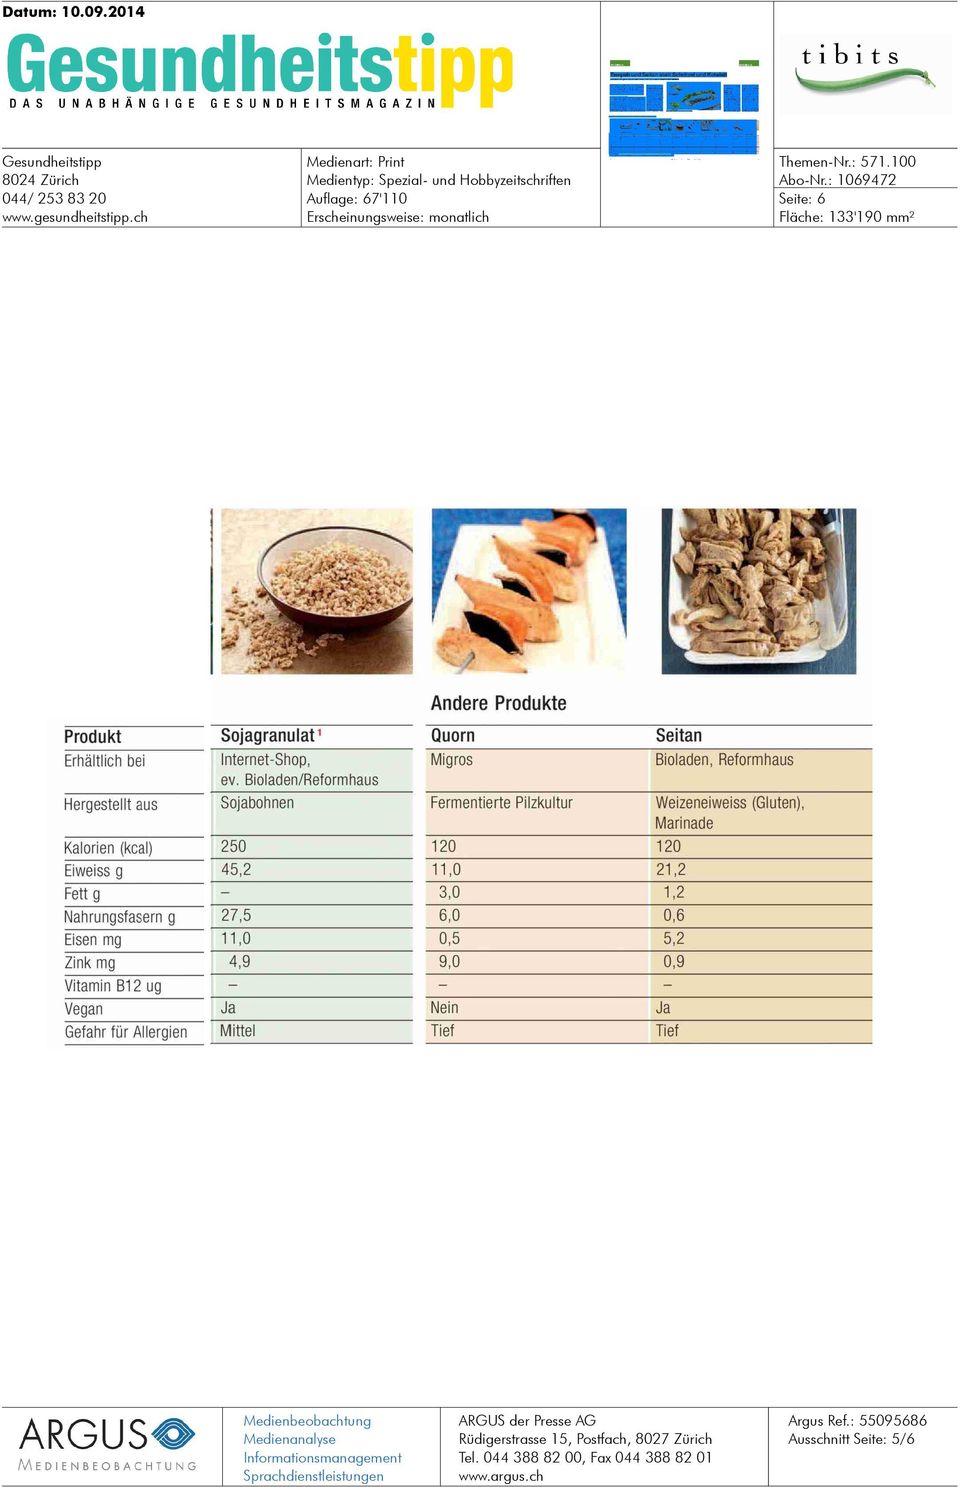 Bioladen/Reformhaus Sojabohnen Fermentierte Pilzkultur Weizeneiweiss (Gluten), Marinade Kalorien (kcal) 250 120